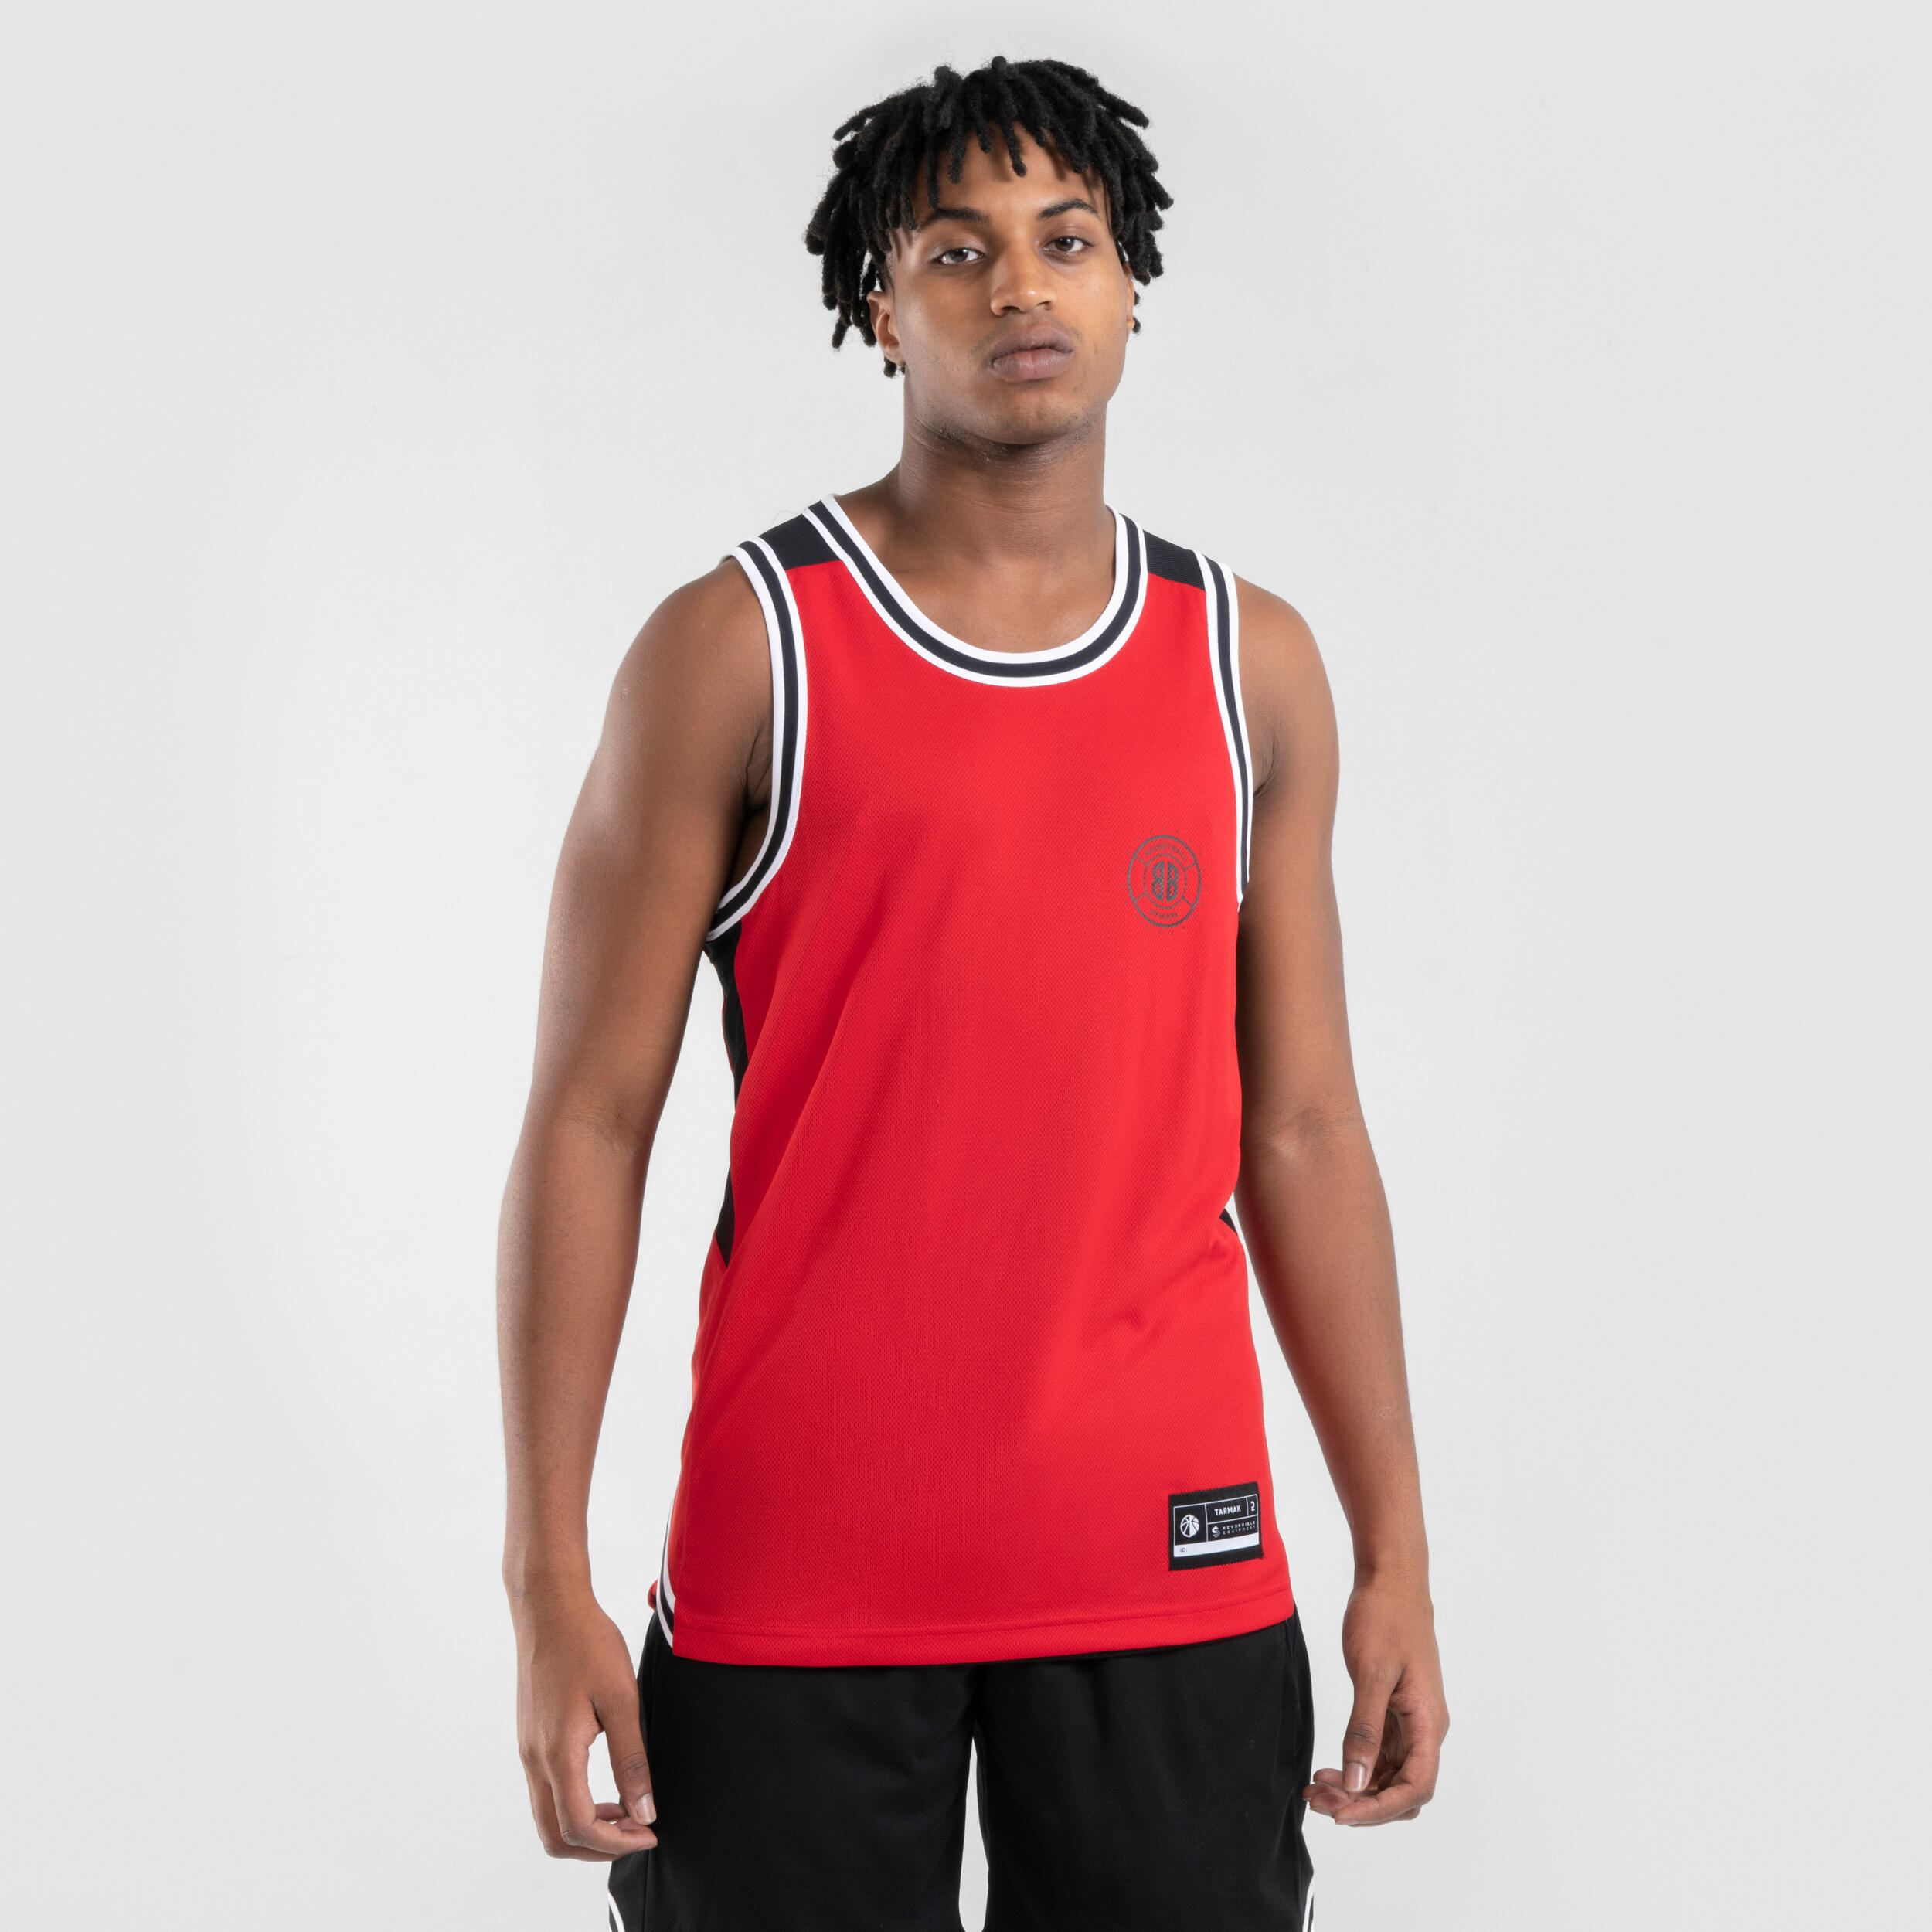 TARMAK Men's/Women's Reversible Sleeveless Basketball Jersey T500 - Black/Red